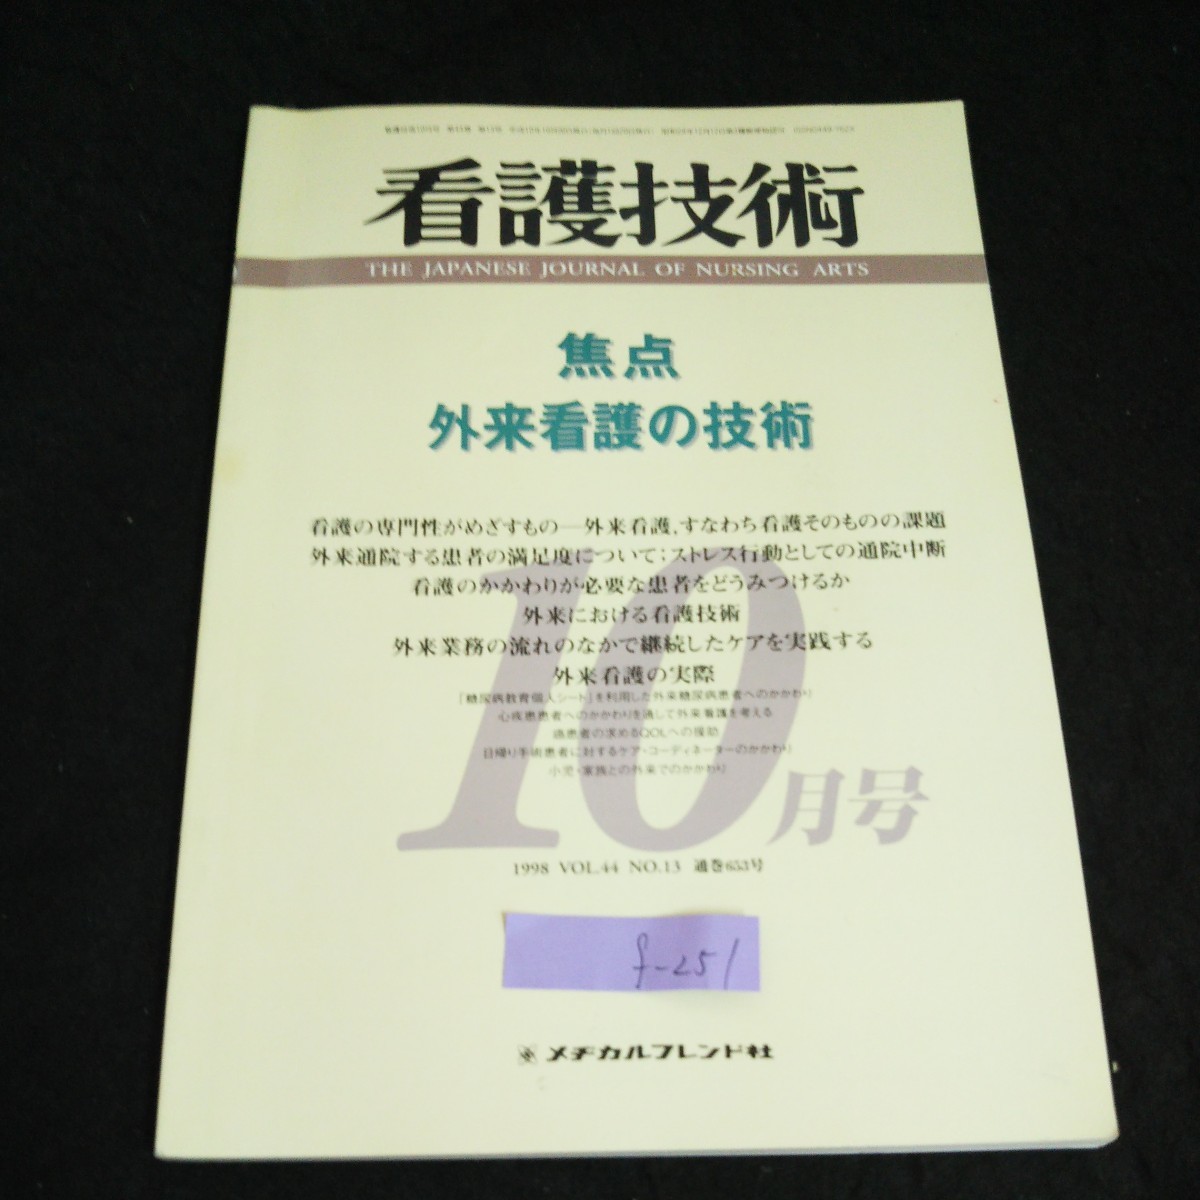 f-251 看護技術No.13/10月号/Vol.44 株式会社メヂカルフレンド社 1998年発行 ※2_画像1